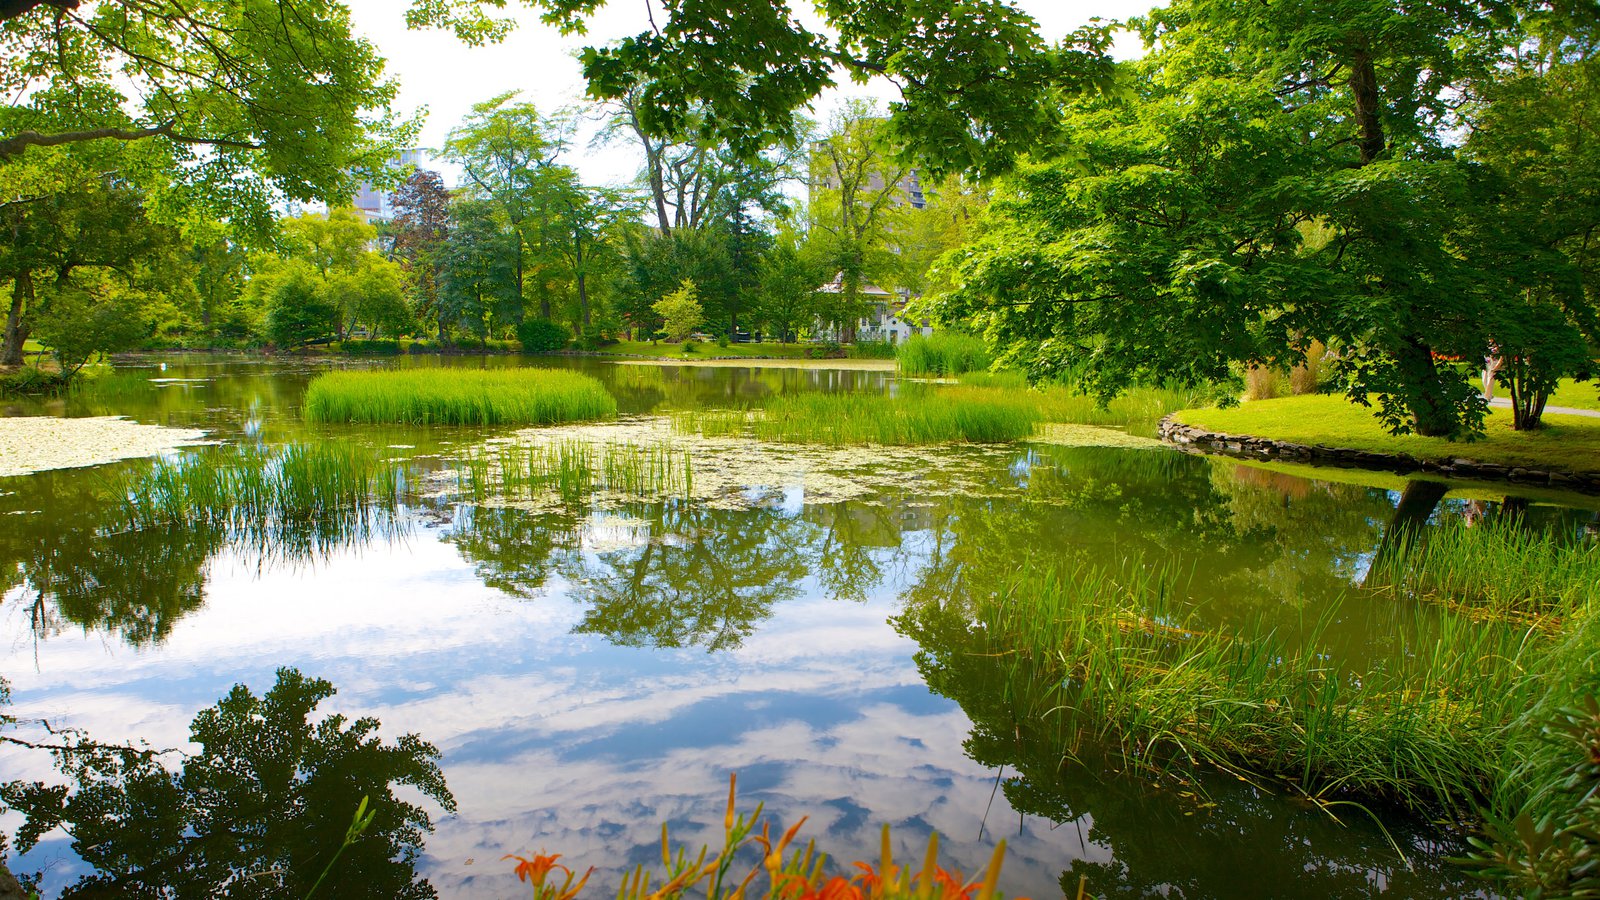 green lush halifax garden image and pond